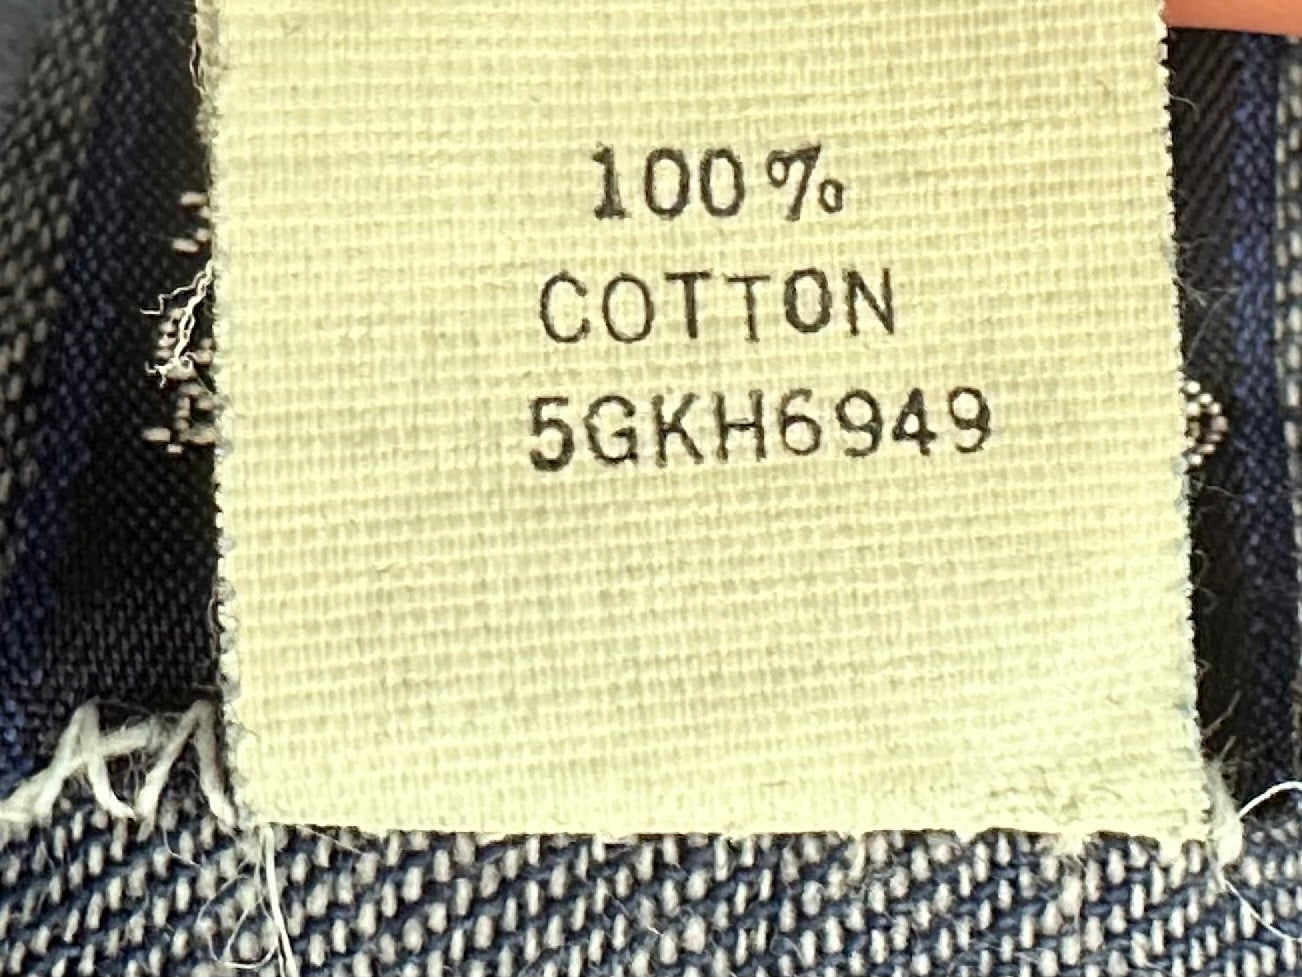 1980s Denim Western Shirt, Wrangler Size Large